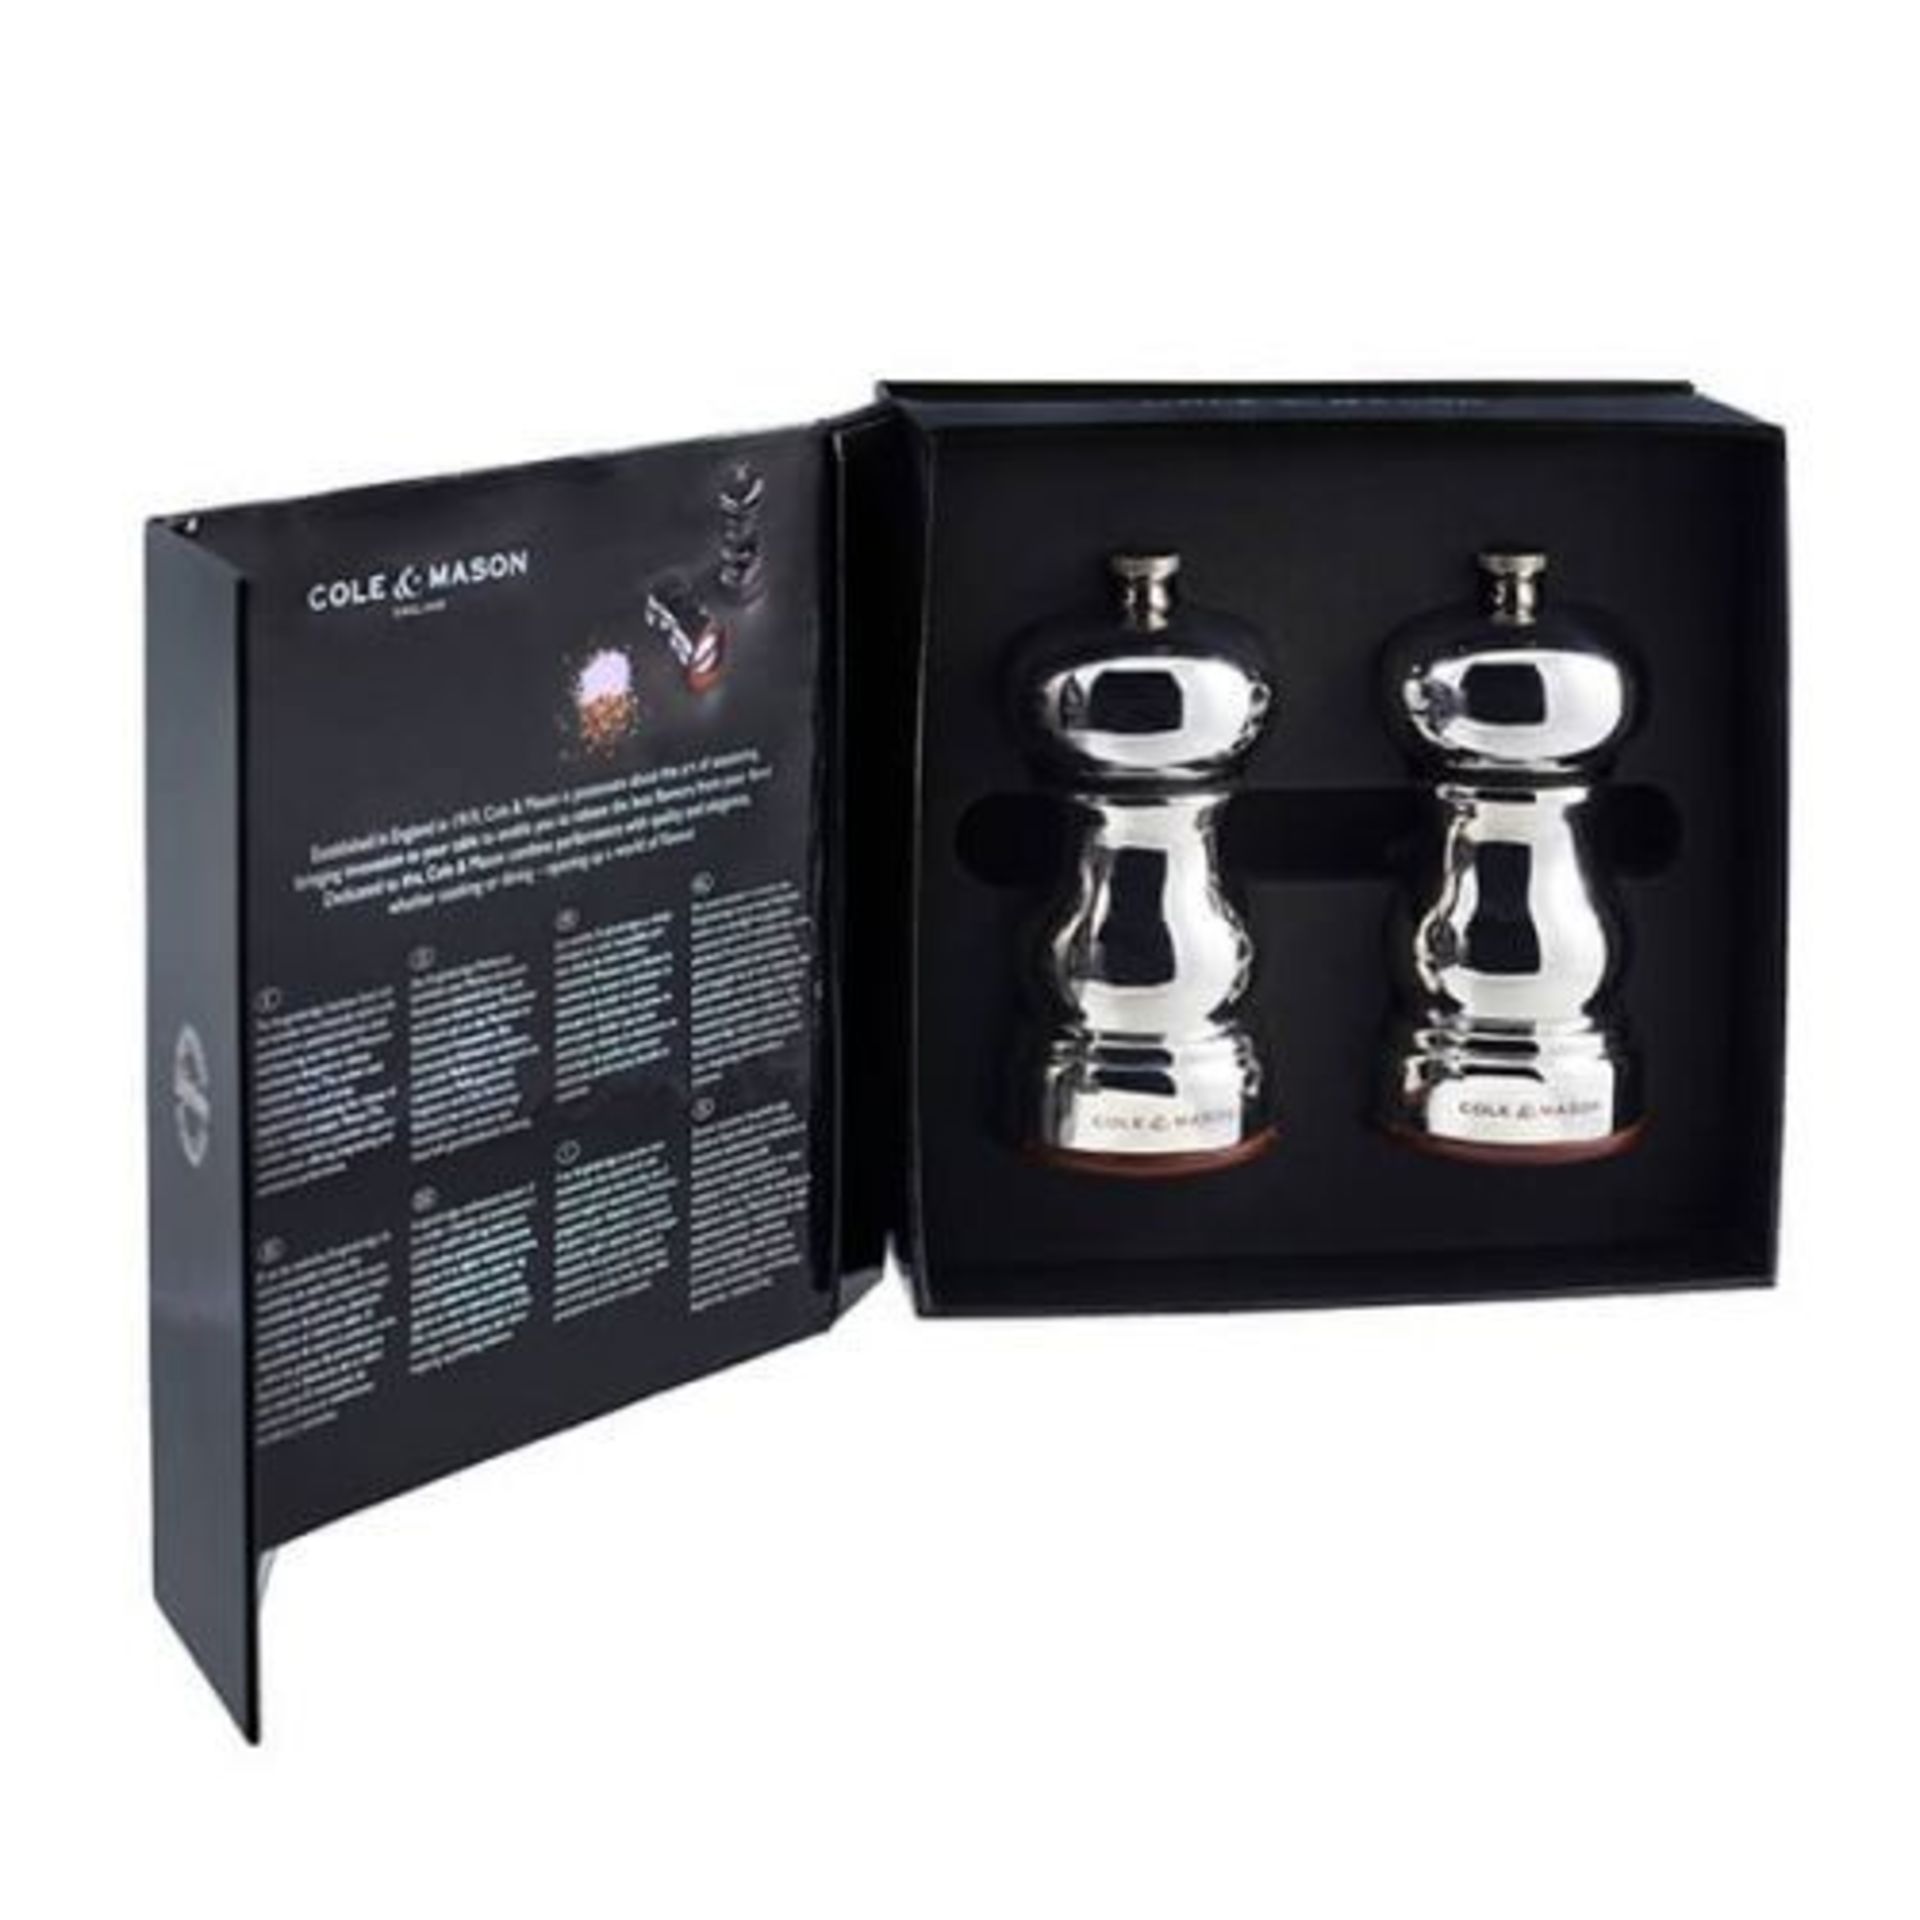 RRP £69.99 - New Cole & Mason Metal Salt & Pepper Shaker - Image 2 of 2